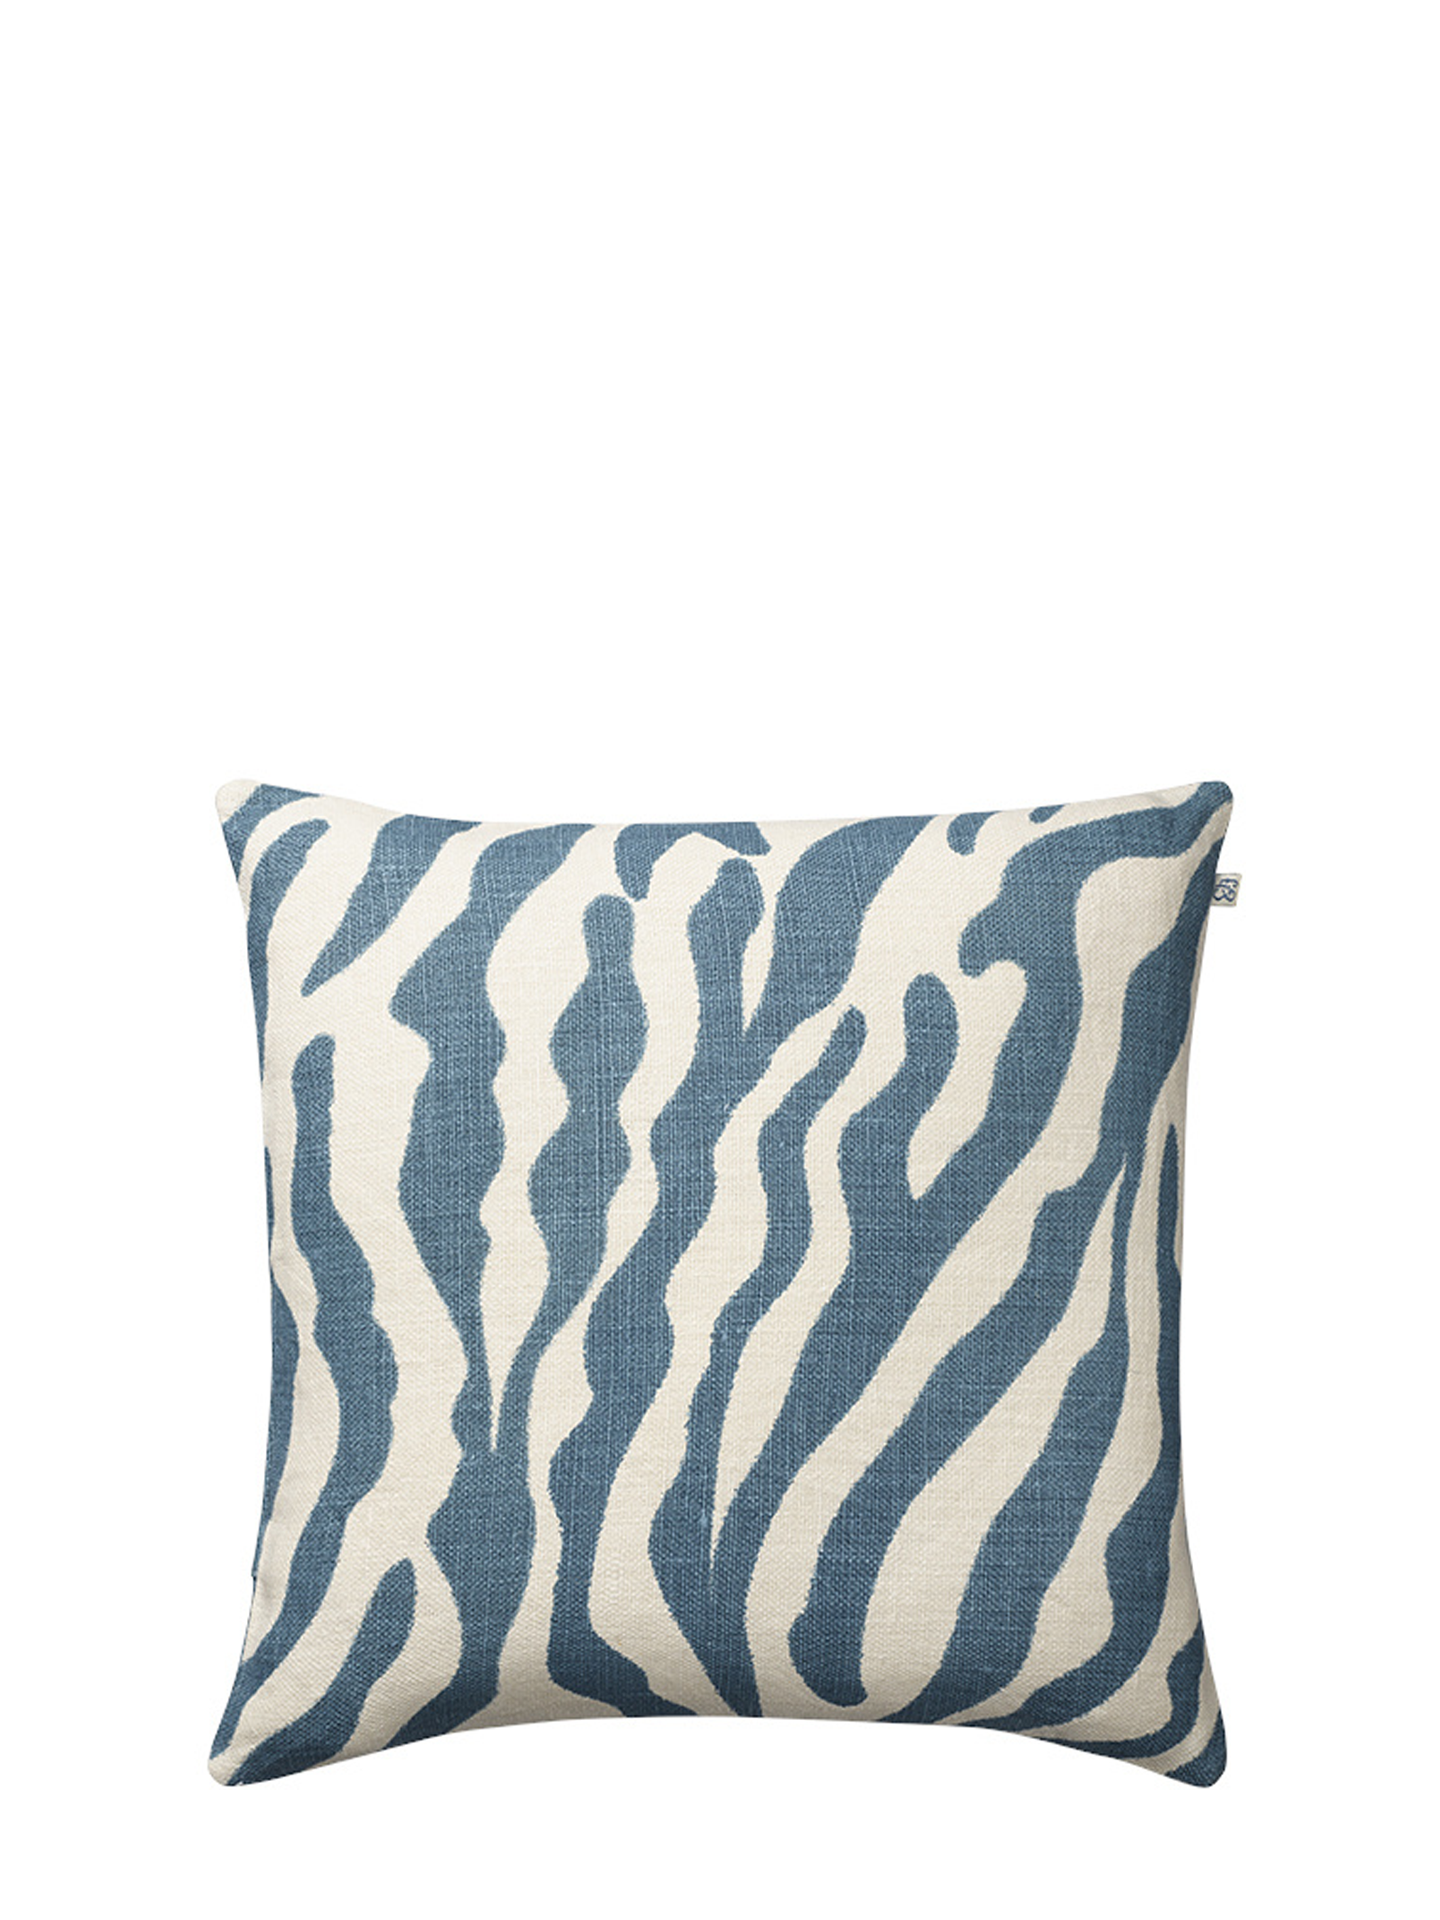 Zebra Cushion Cover, Sky Blue